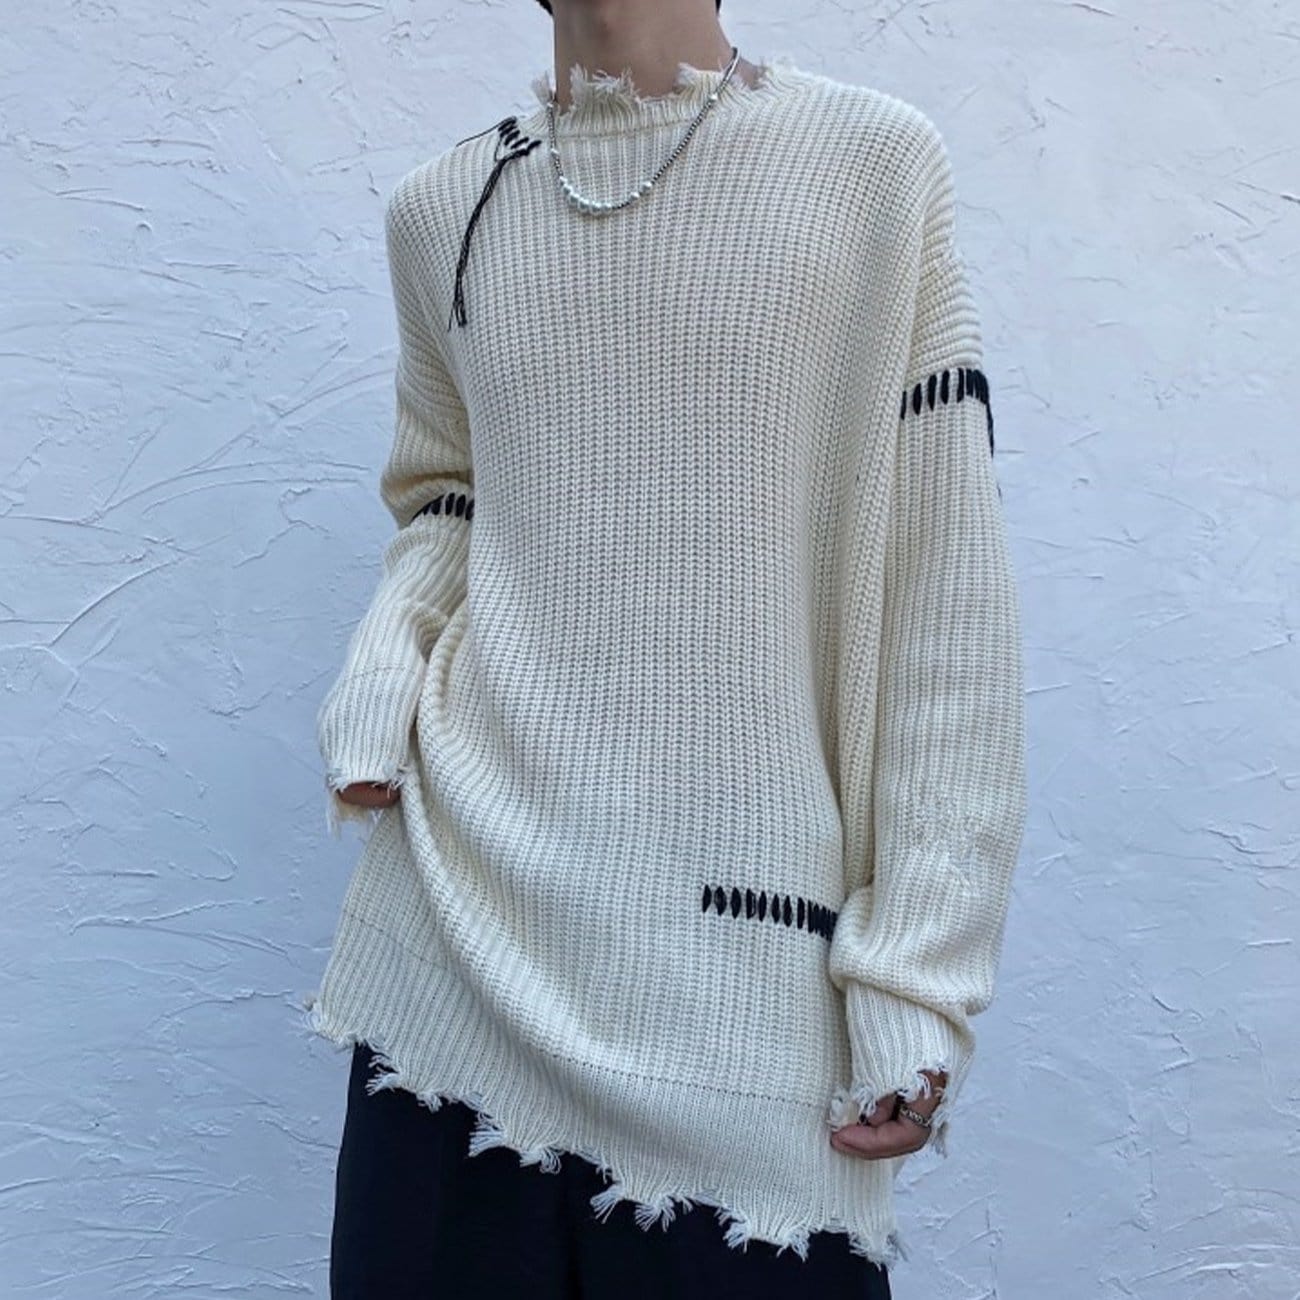 Dark Knitted Sweater